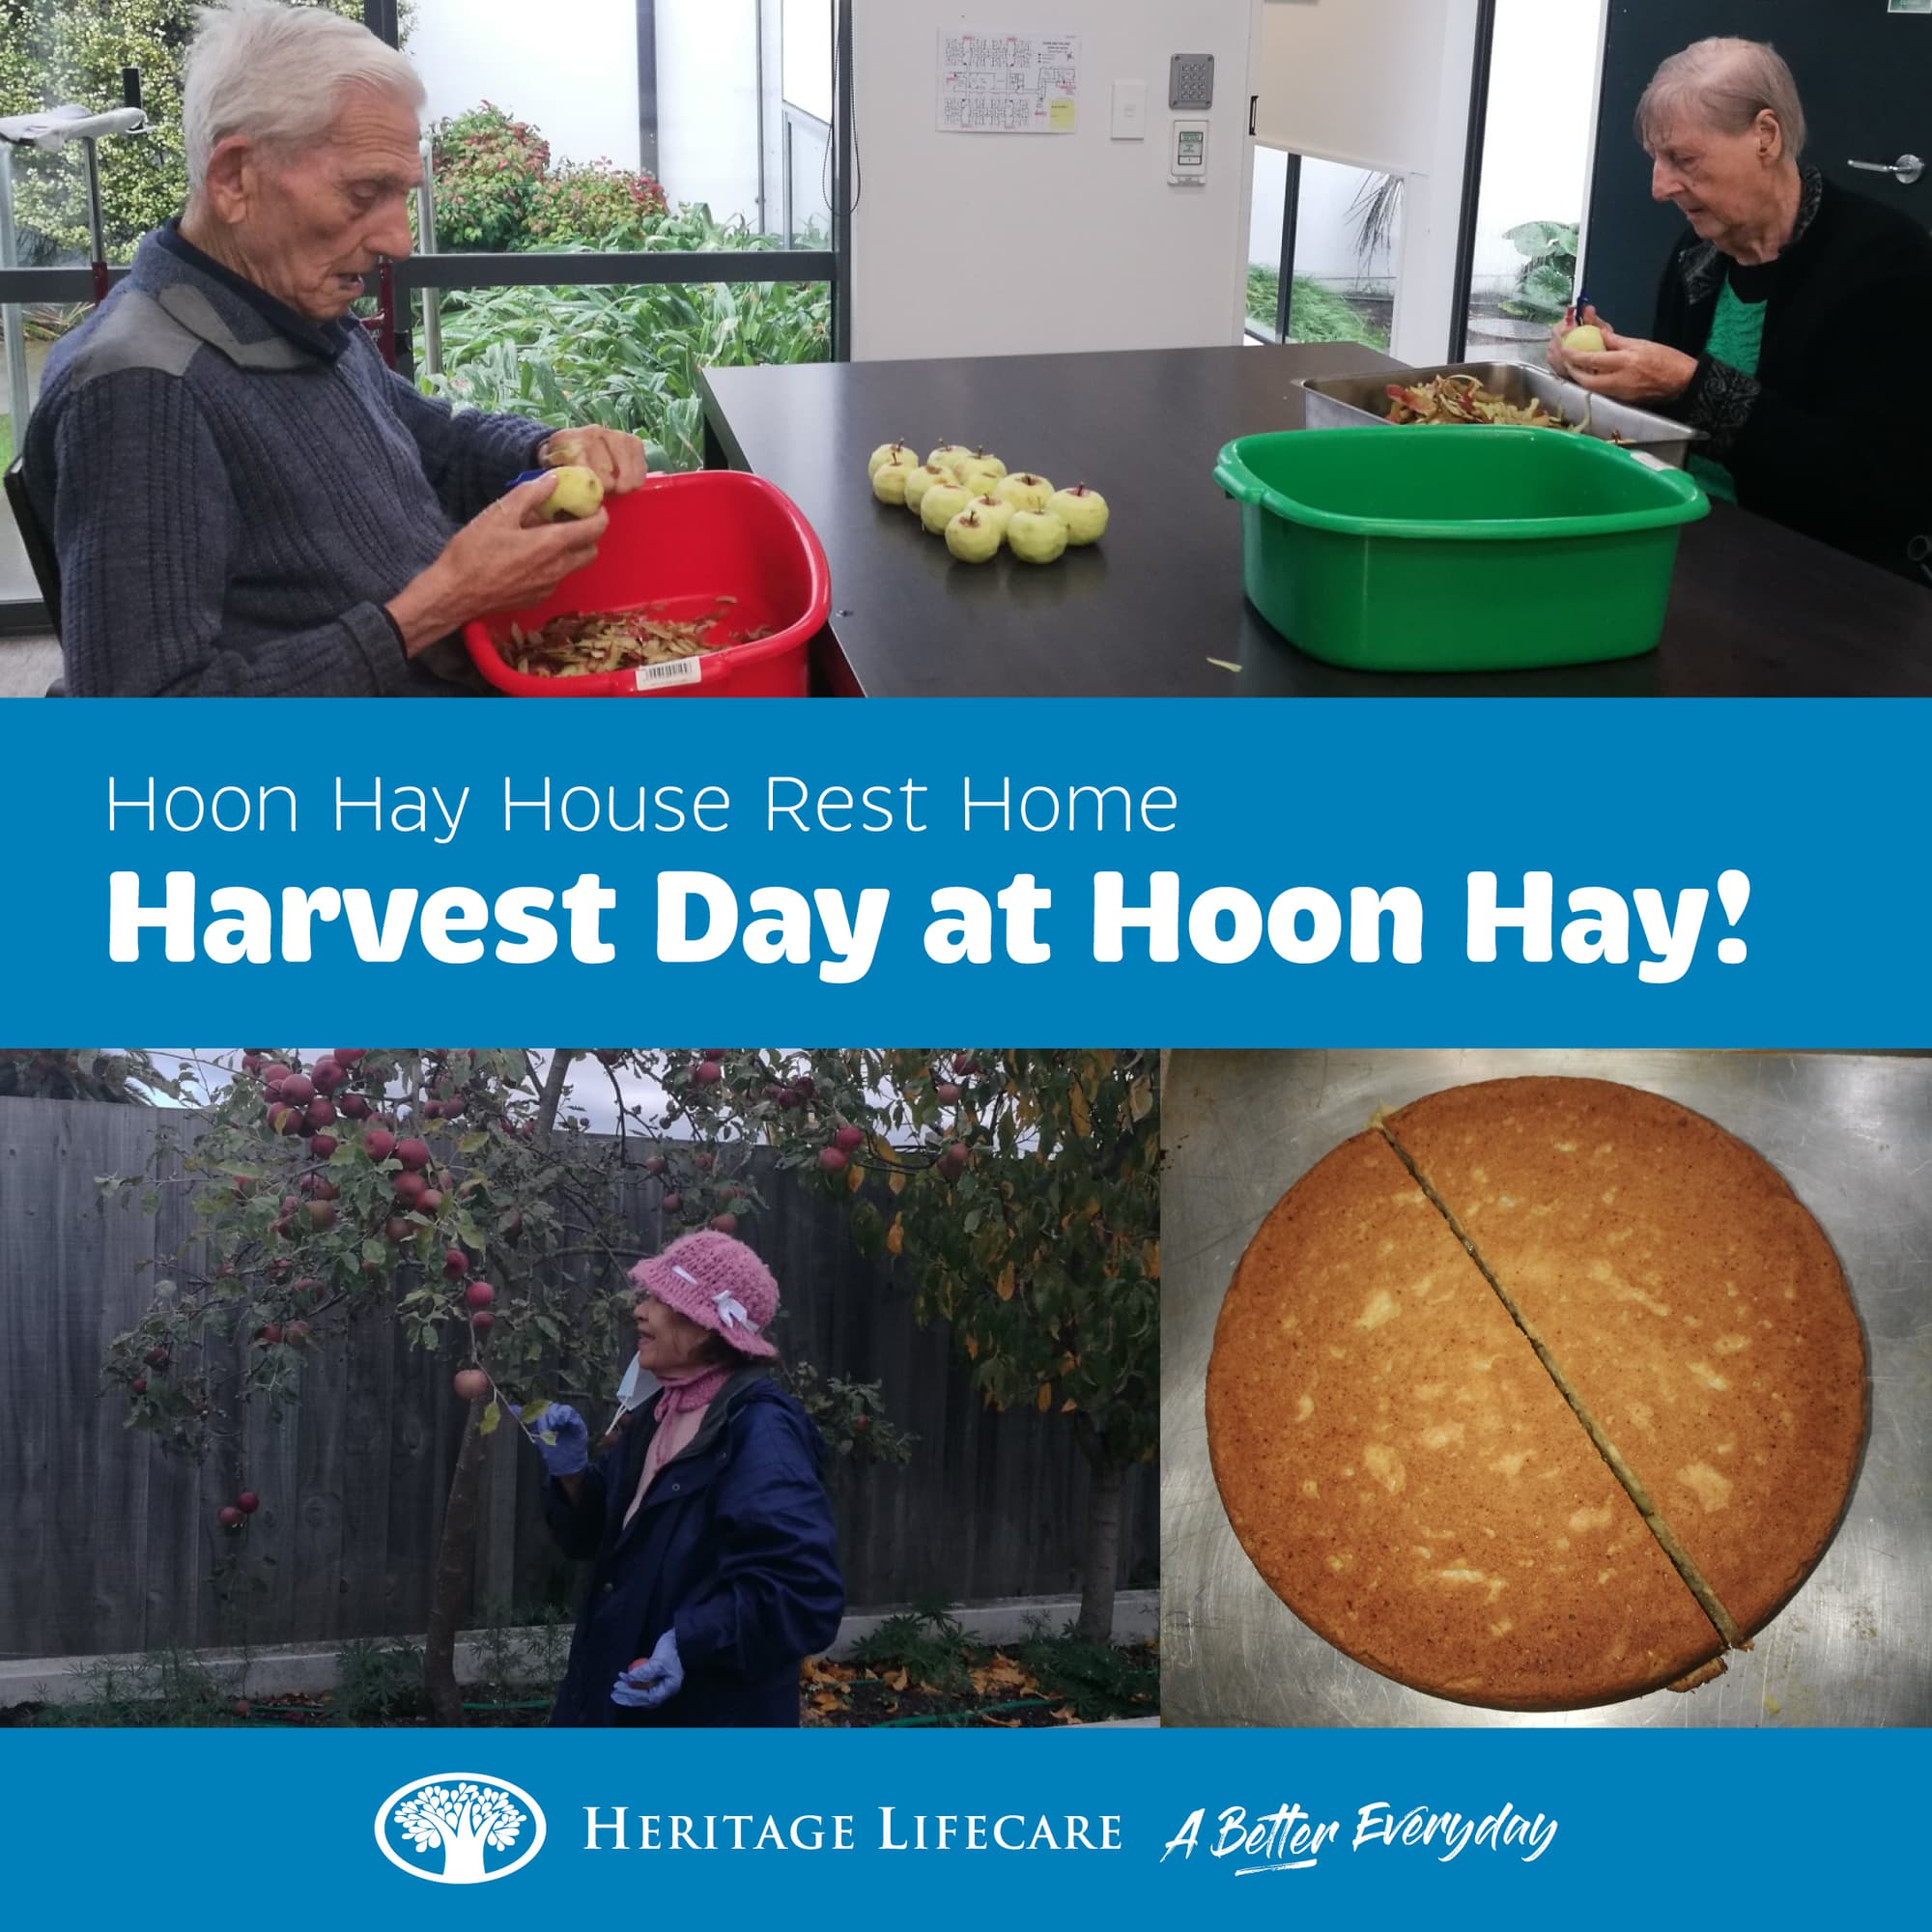 Harvest Day at Hoon Hay!